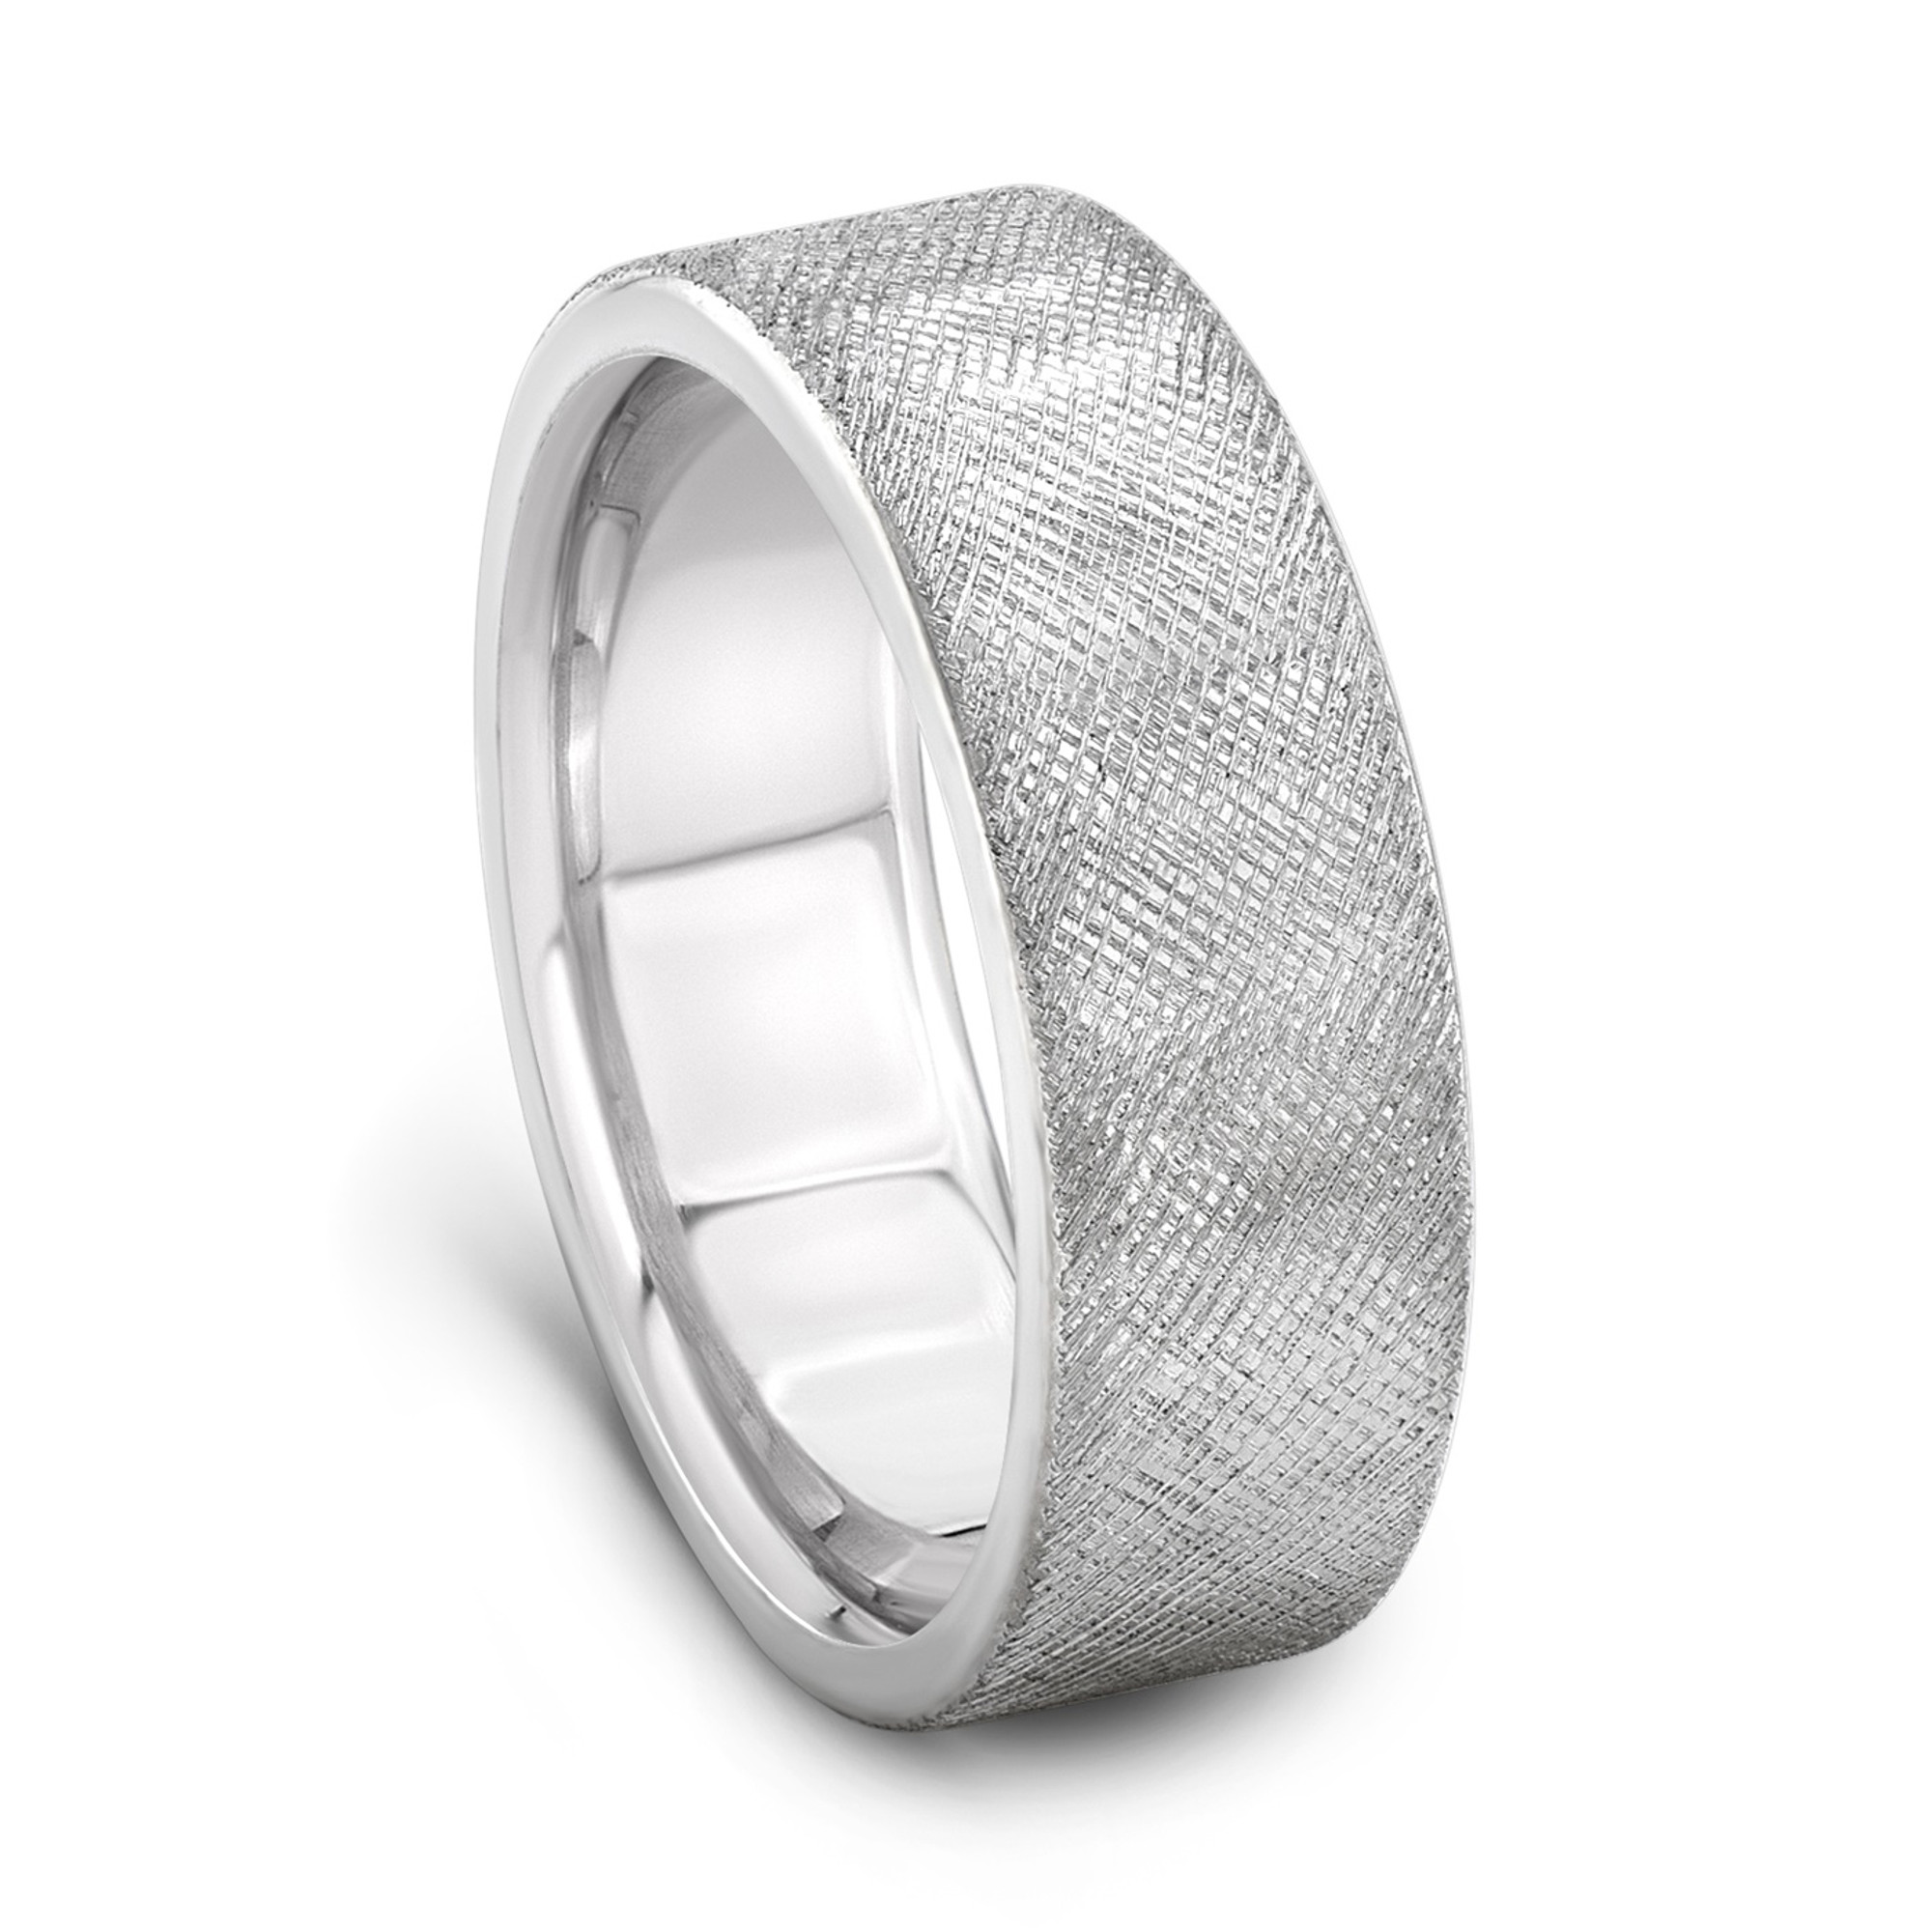 How To Clean Men's Palladium Wedding Rings? - Diamond Engagement Rings For  Men & Women - Quora